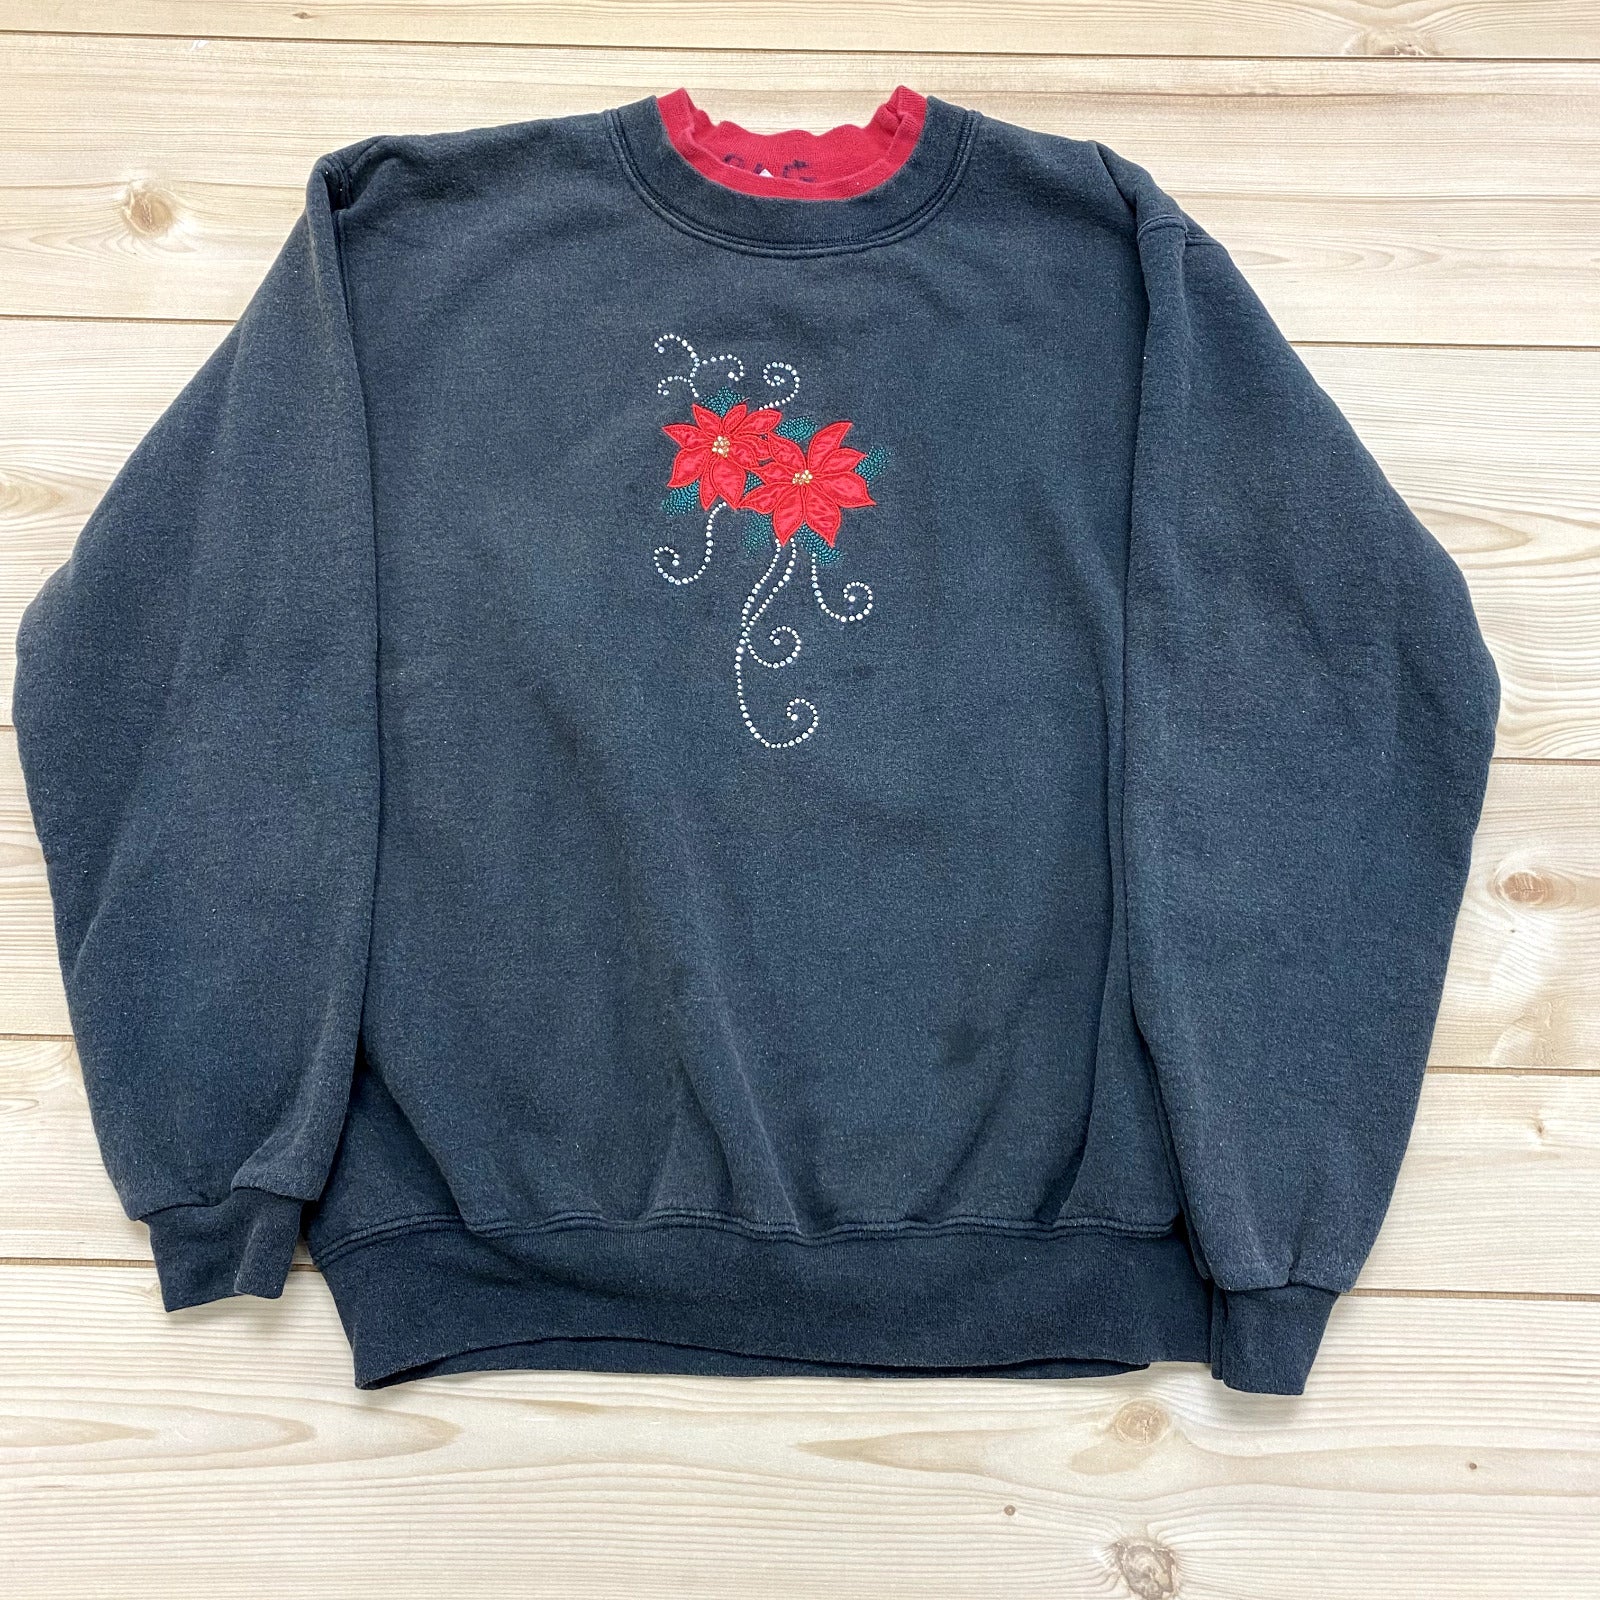 Vintage Top Stitch Grey Long Sleeve Crew Neck Pullover Sweatshirt Adult Size L